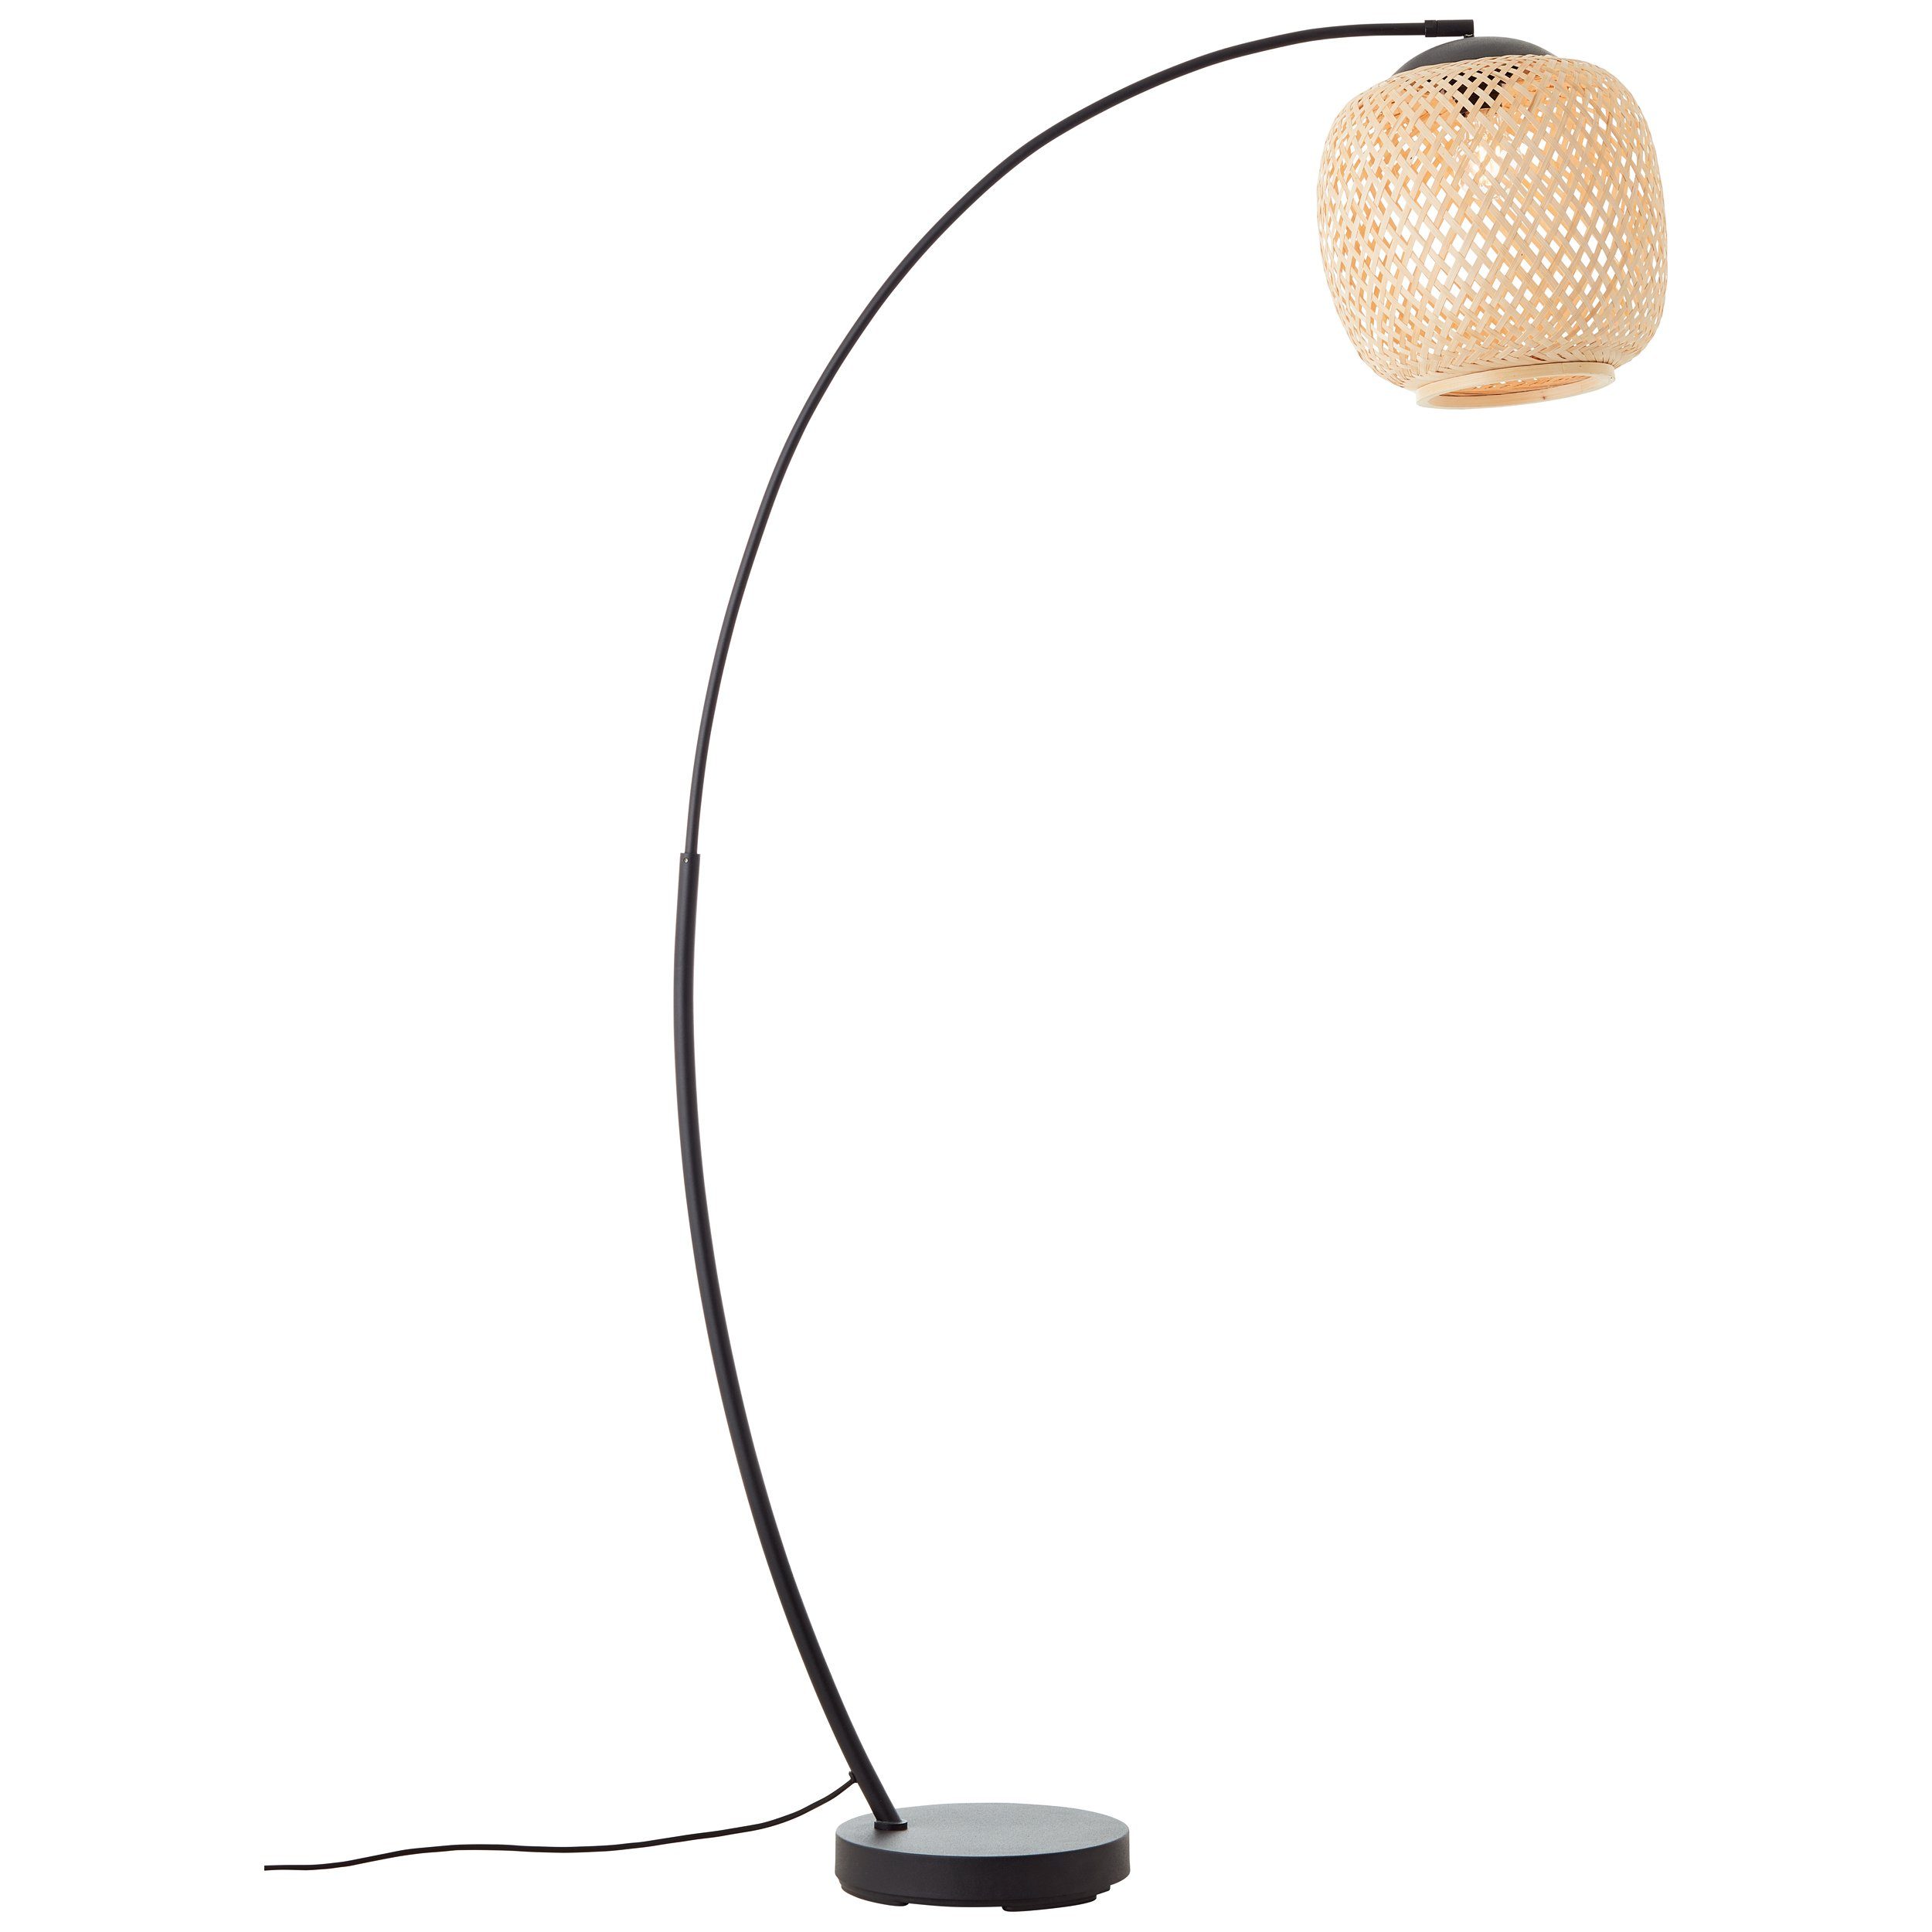 Brilliant Stehlampe schwarz/rattan, A60, 1-flammig Mesa E27 Standleuchte Metall/Bambus, 1x Mesa